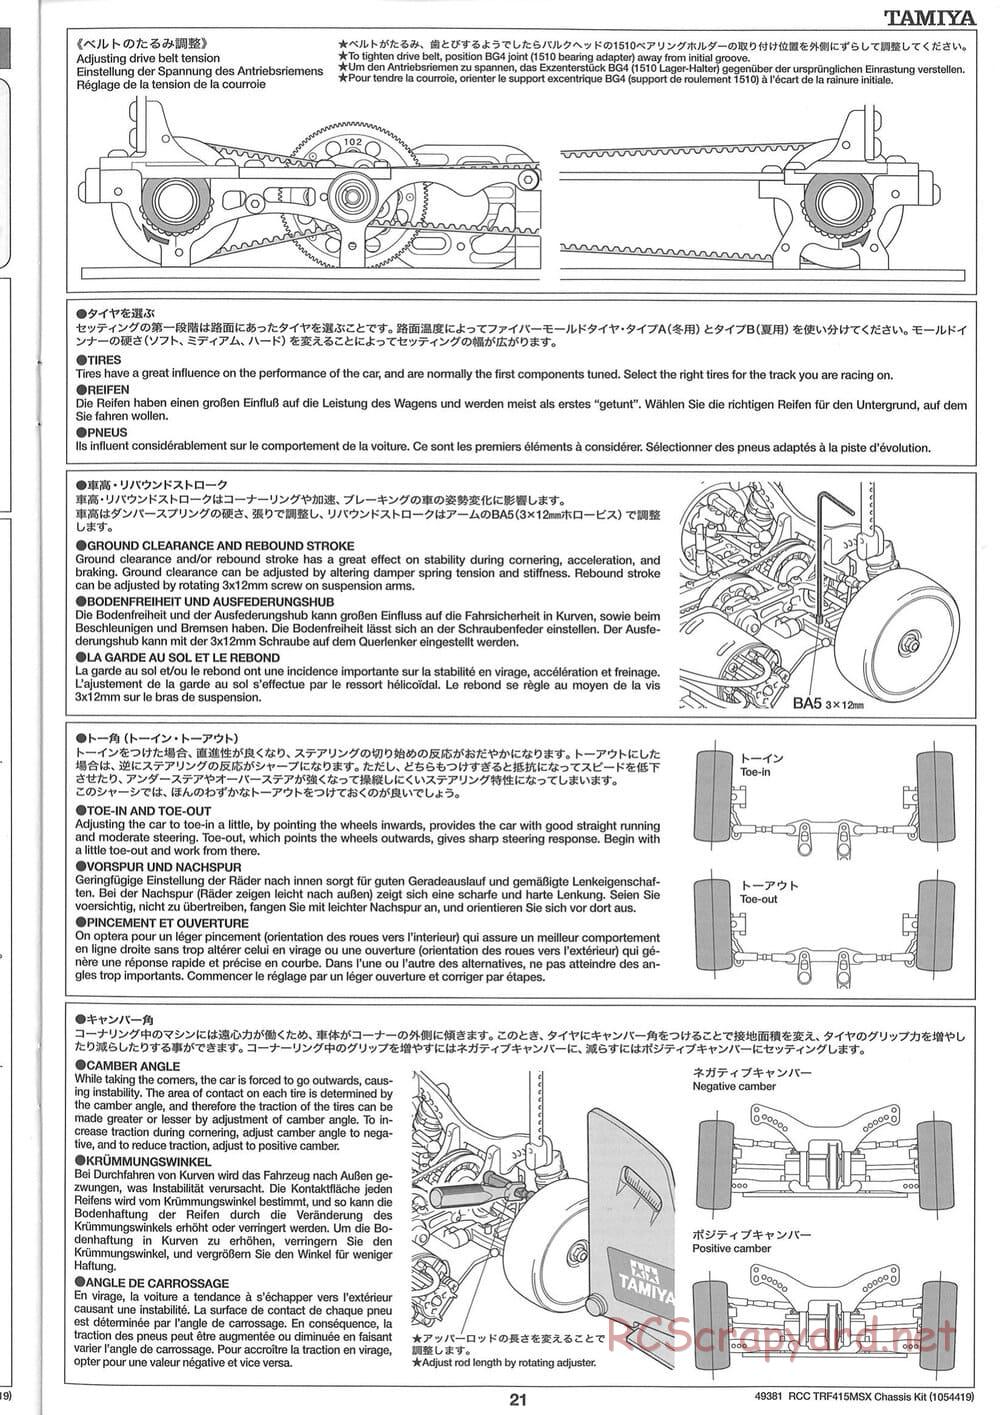 Tamiya - TRF415-MSX Chassis - Manual - Page 21